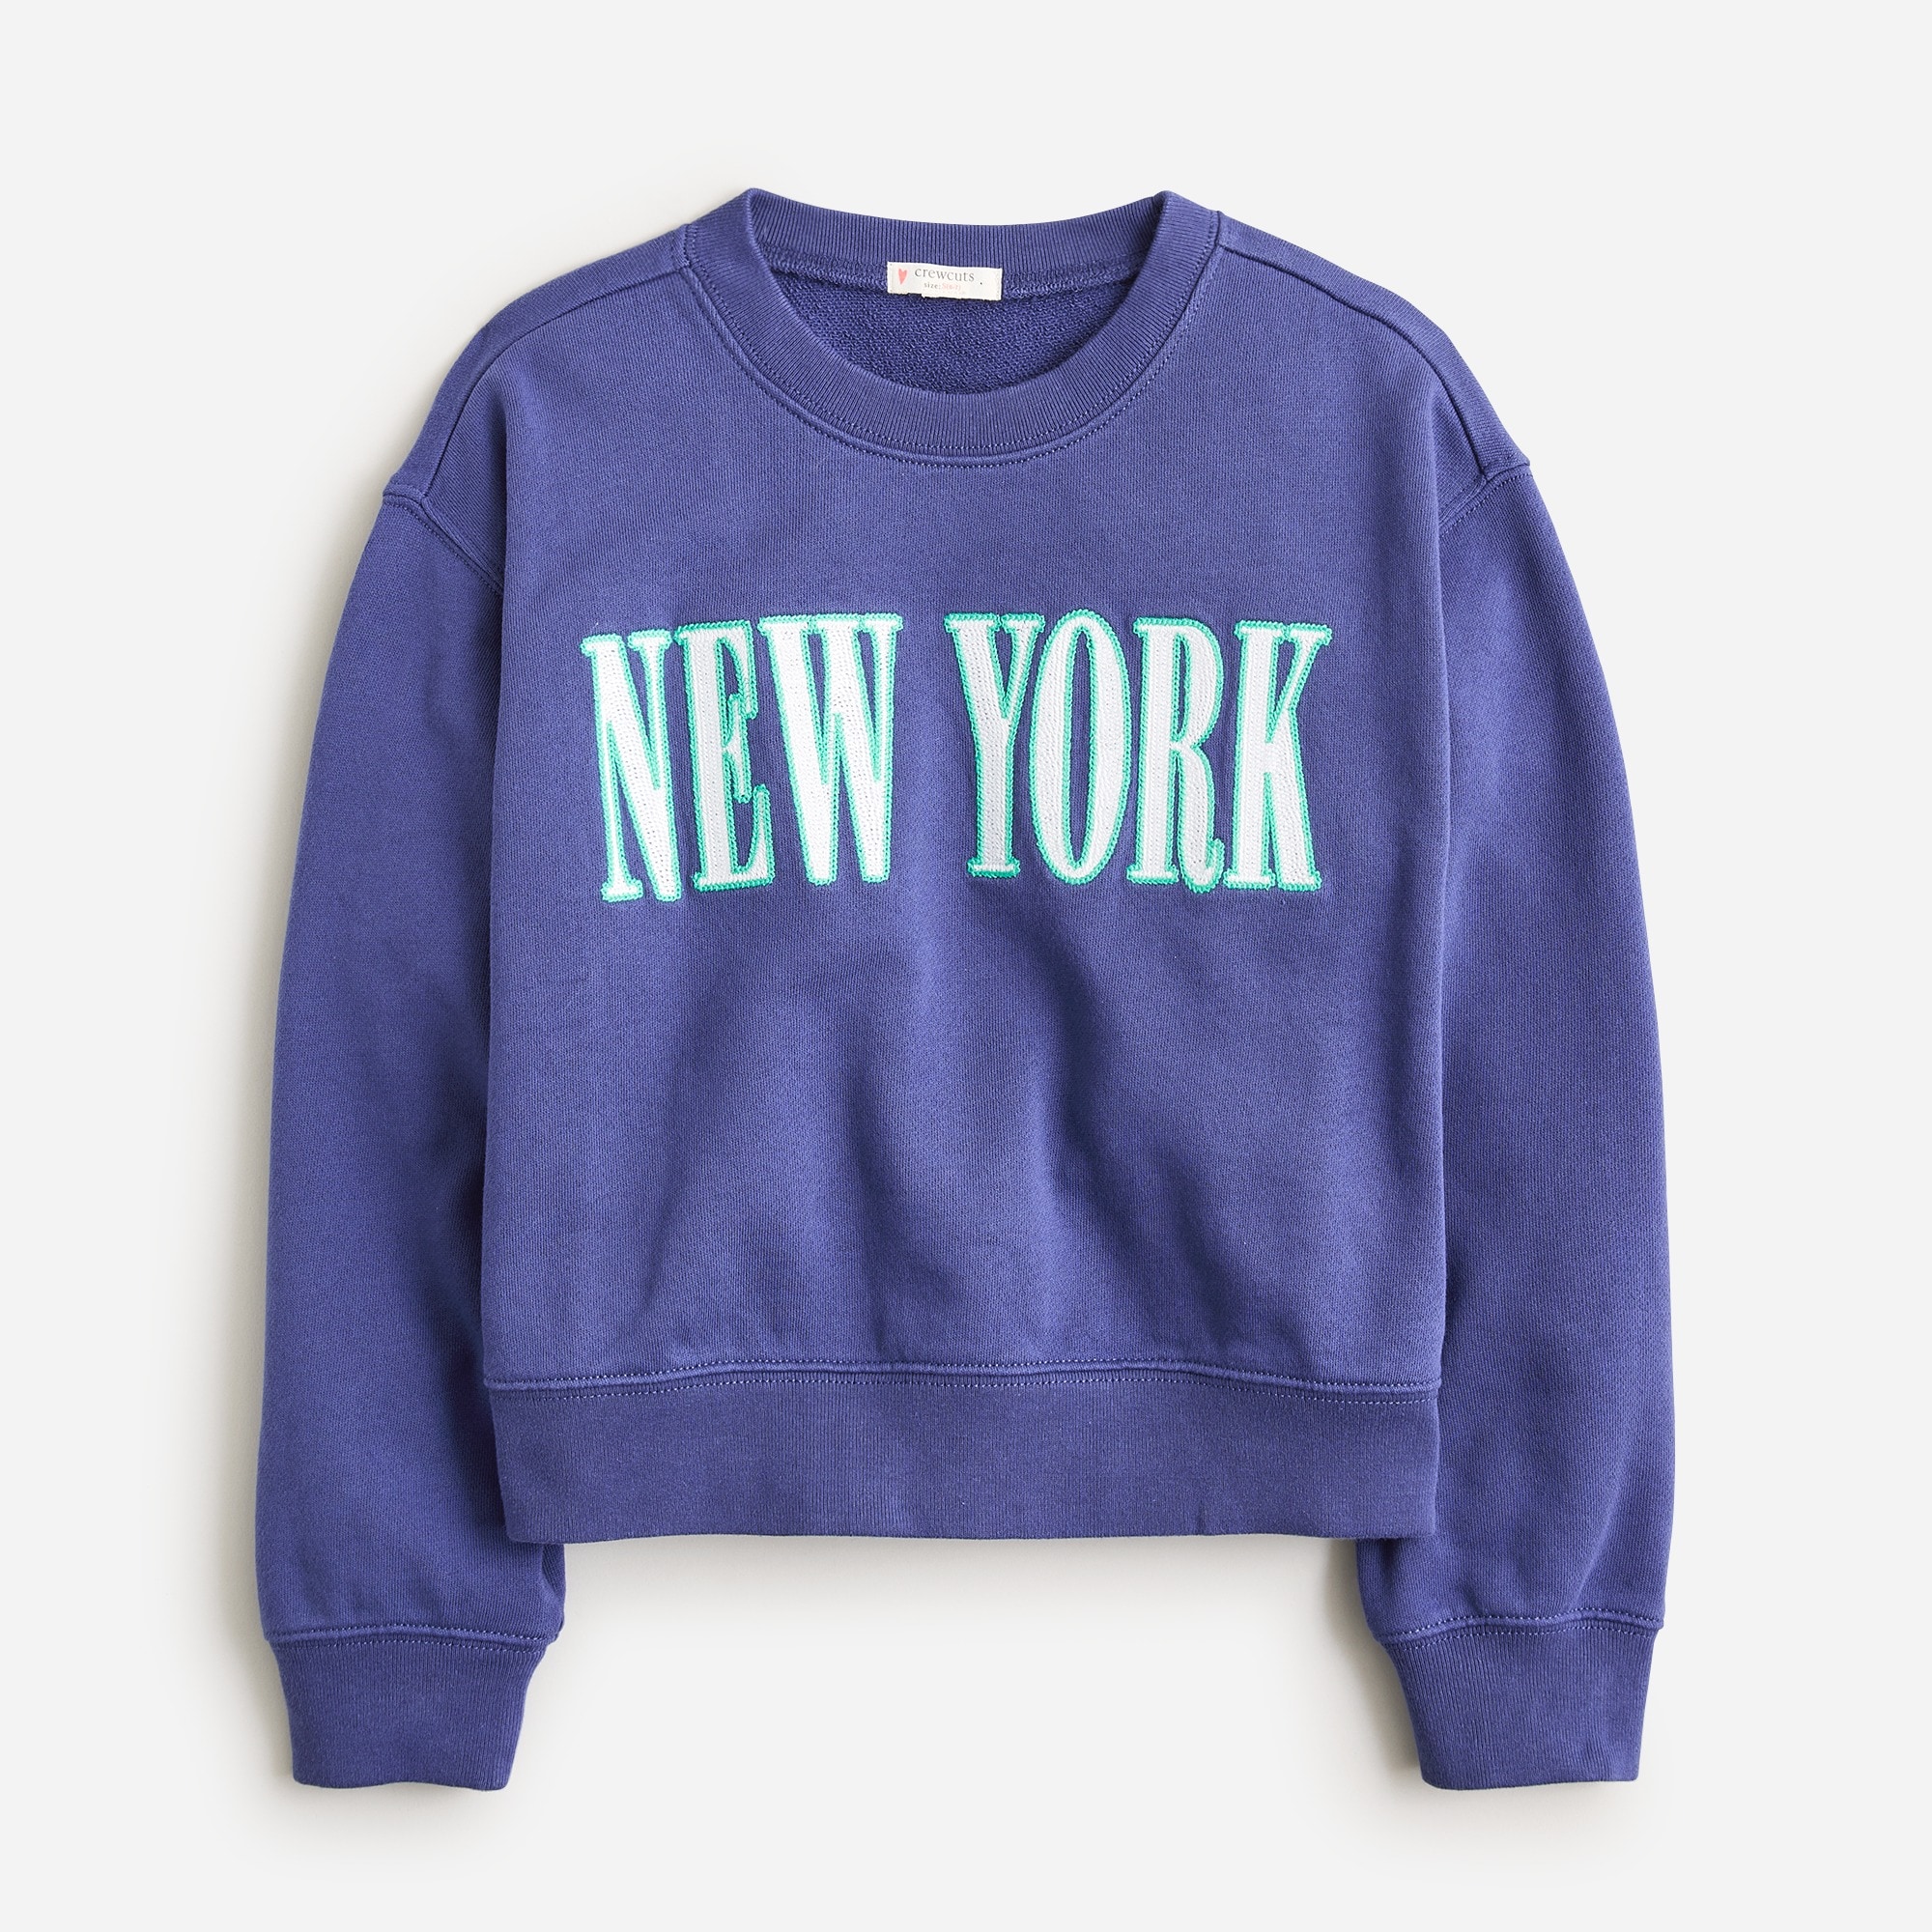 Jcrew Kids embroidered New York graphic crewneck sweatshirt